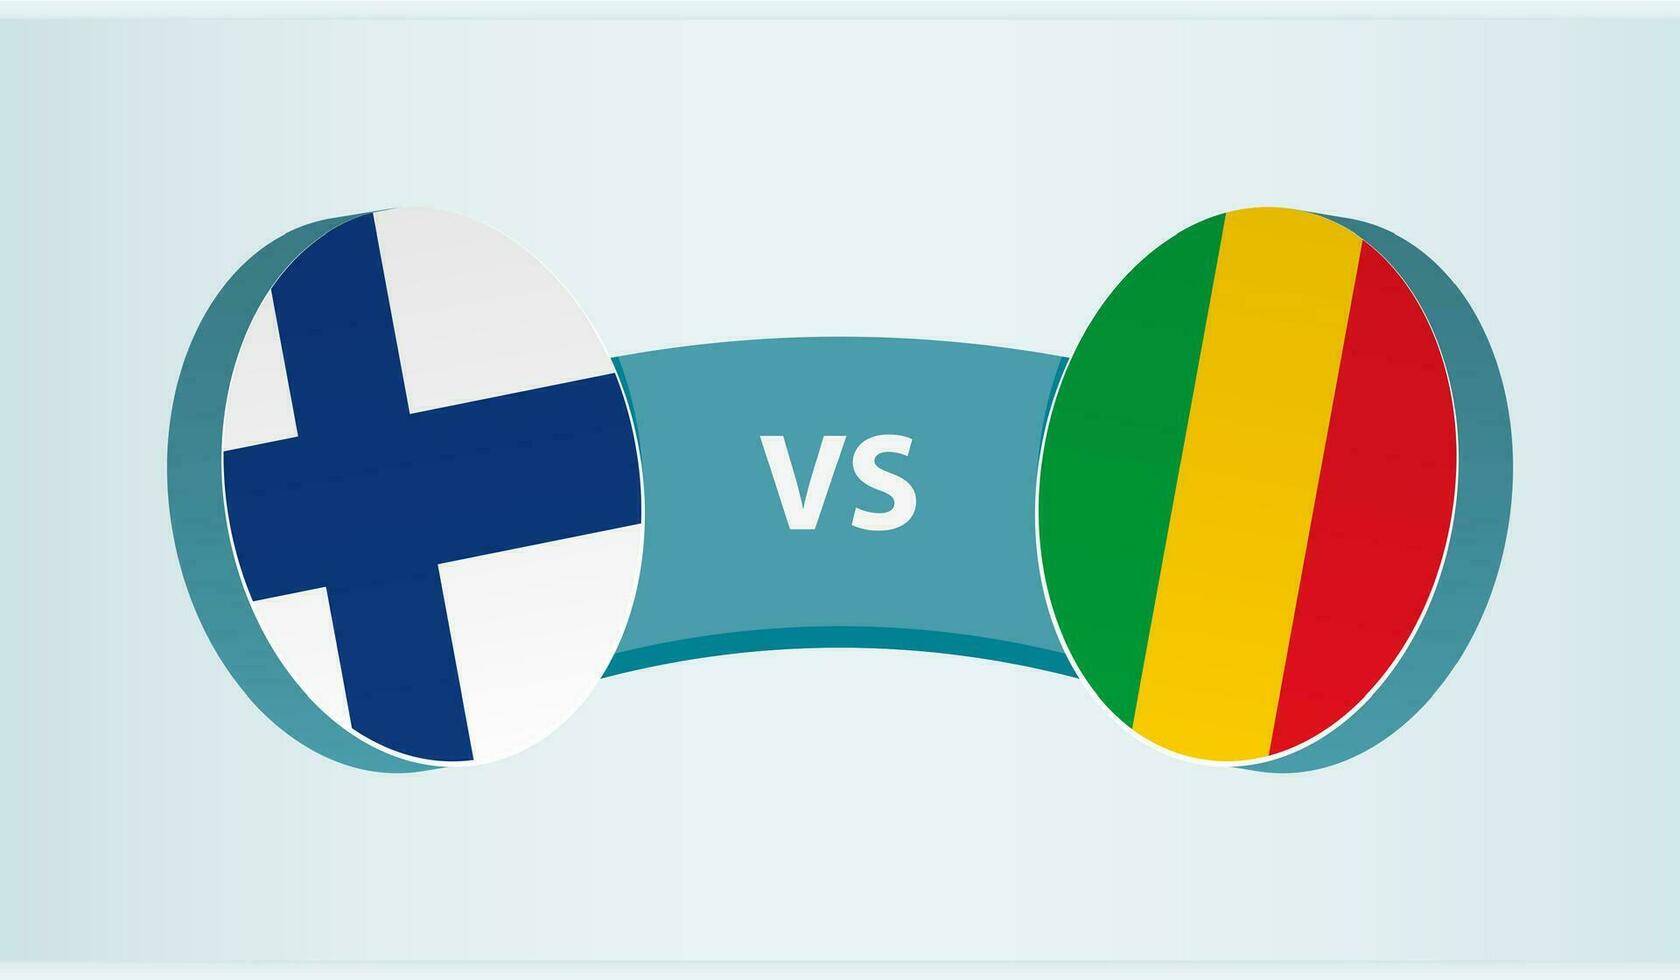 finland mot mali, team sporter konkurrens begrepp. vektor